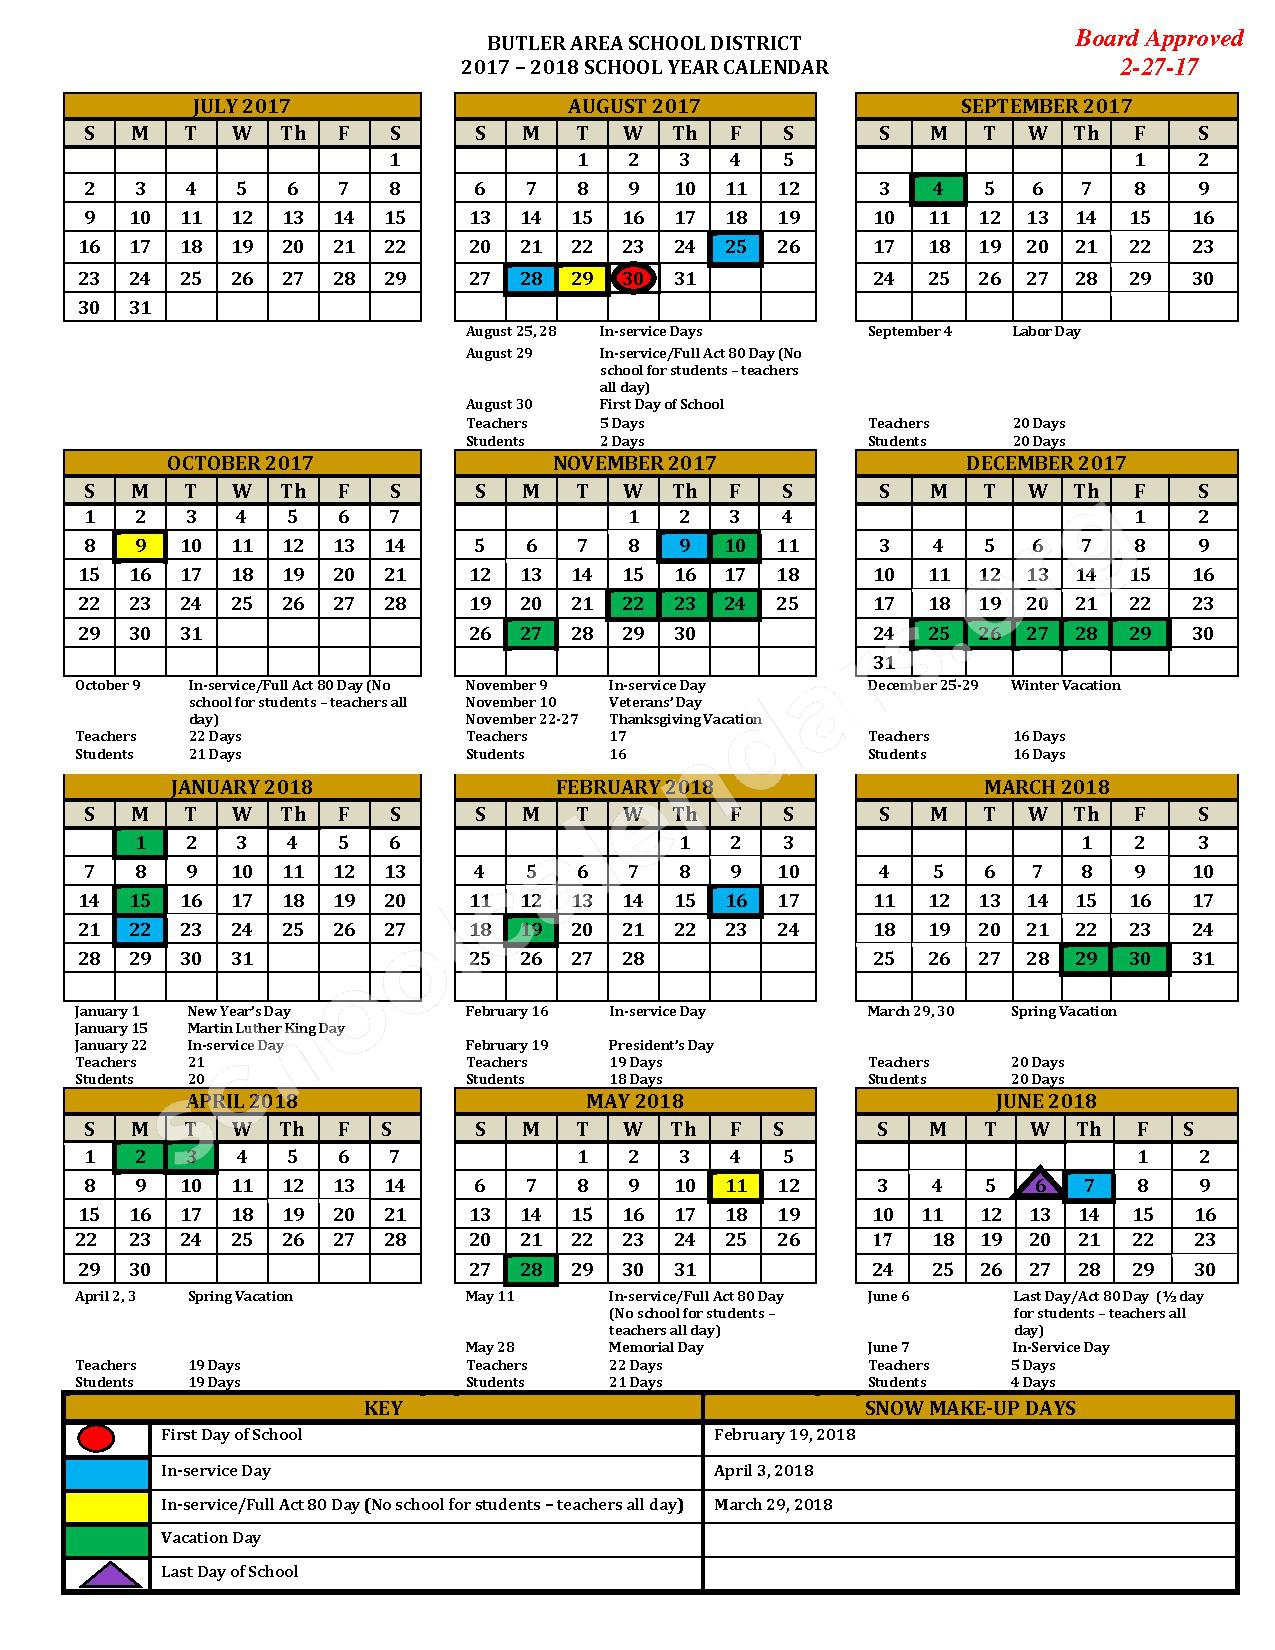 Butler Area School District Calendar 2024 - Schoolcalendars.net